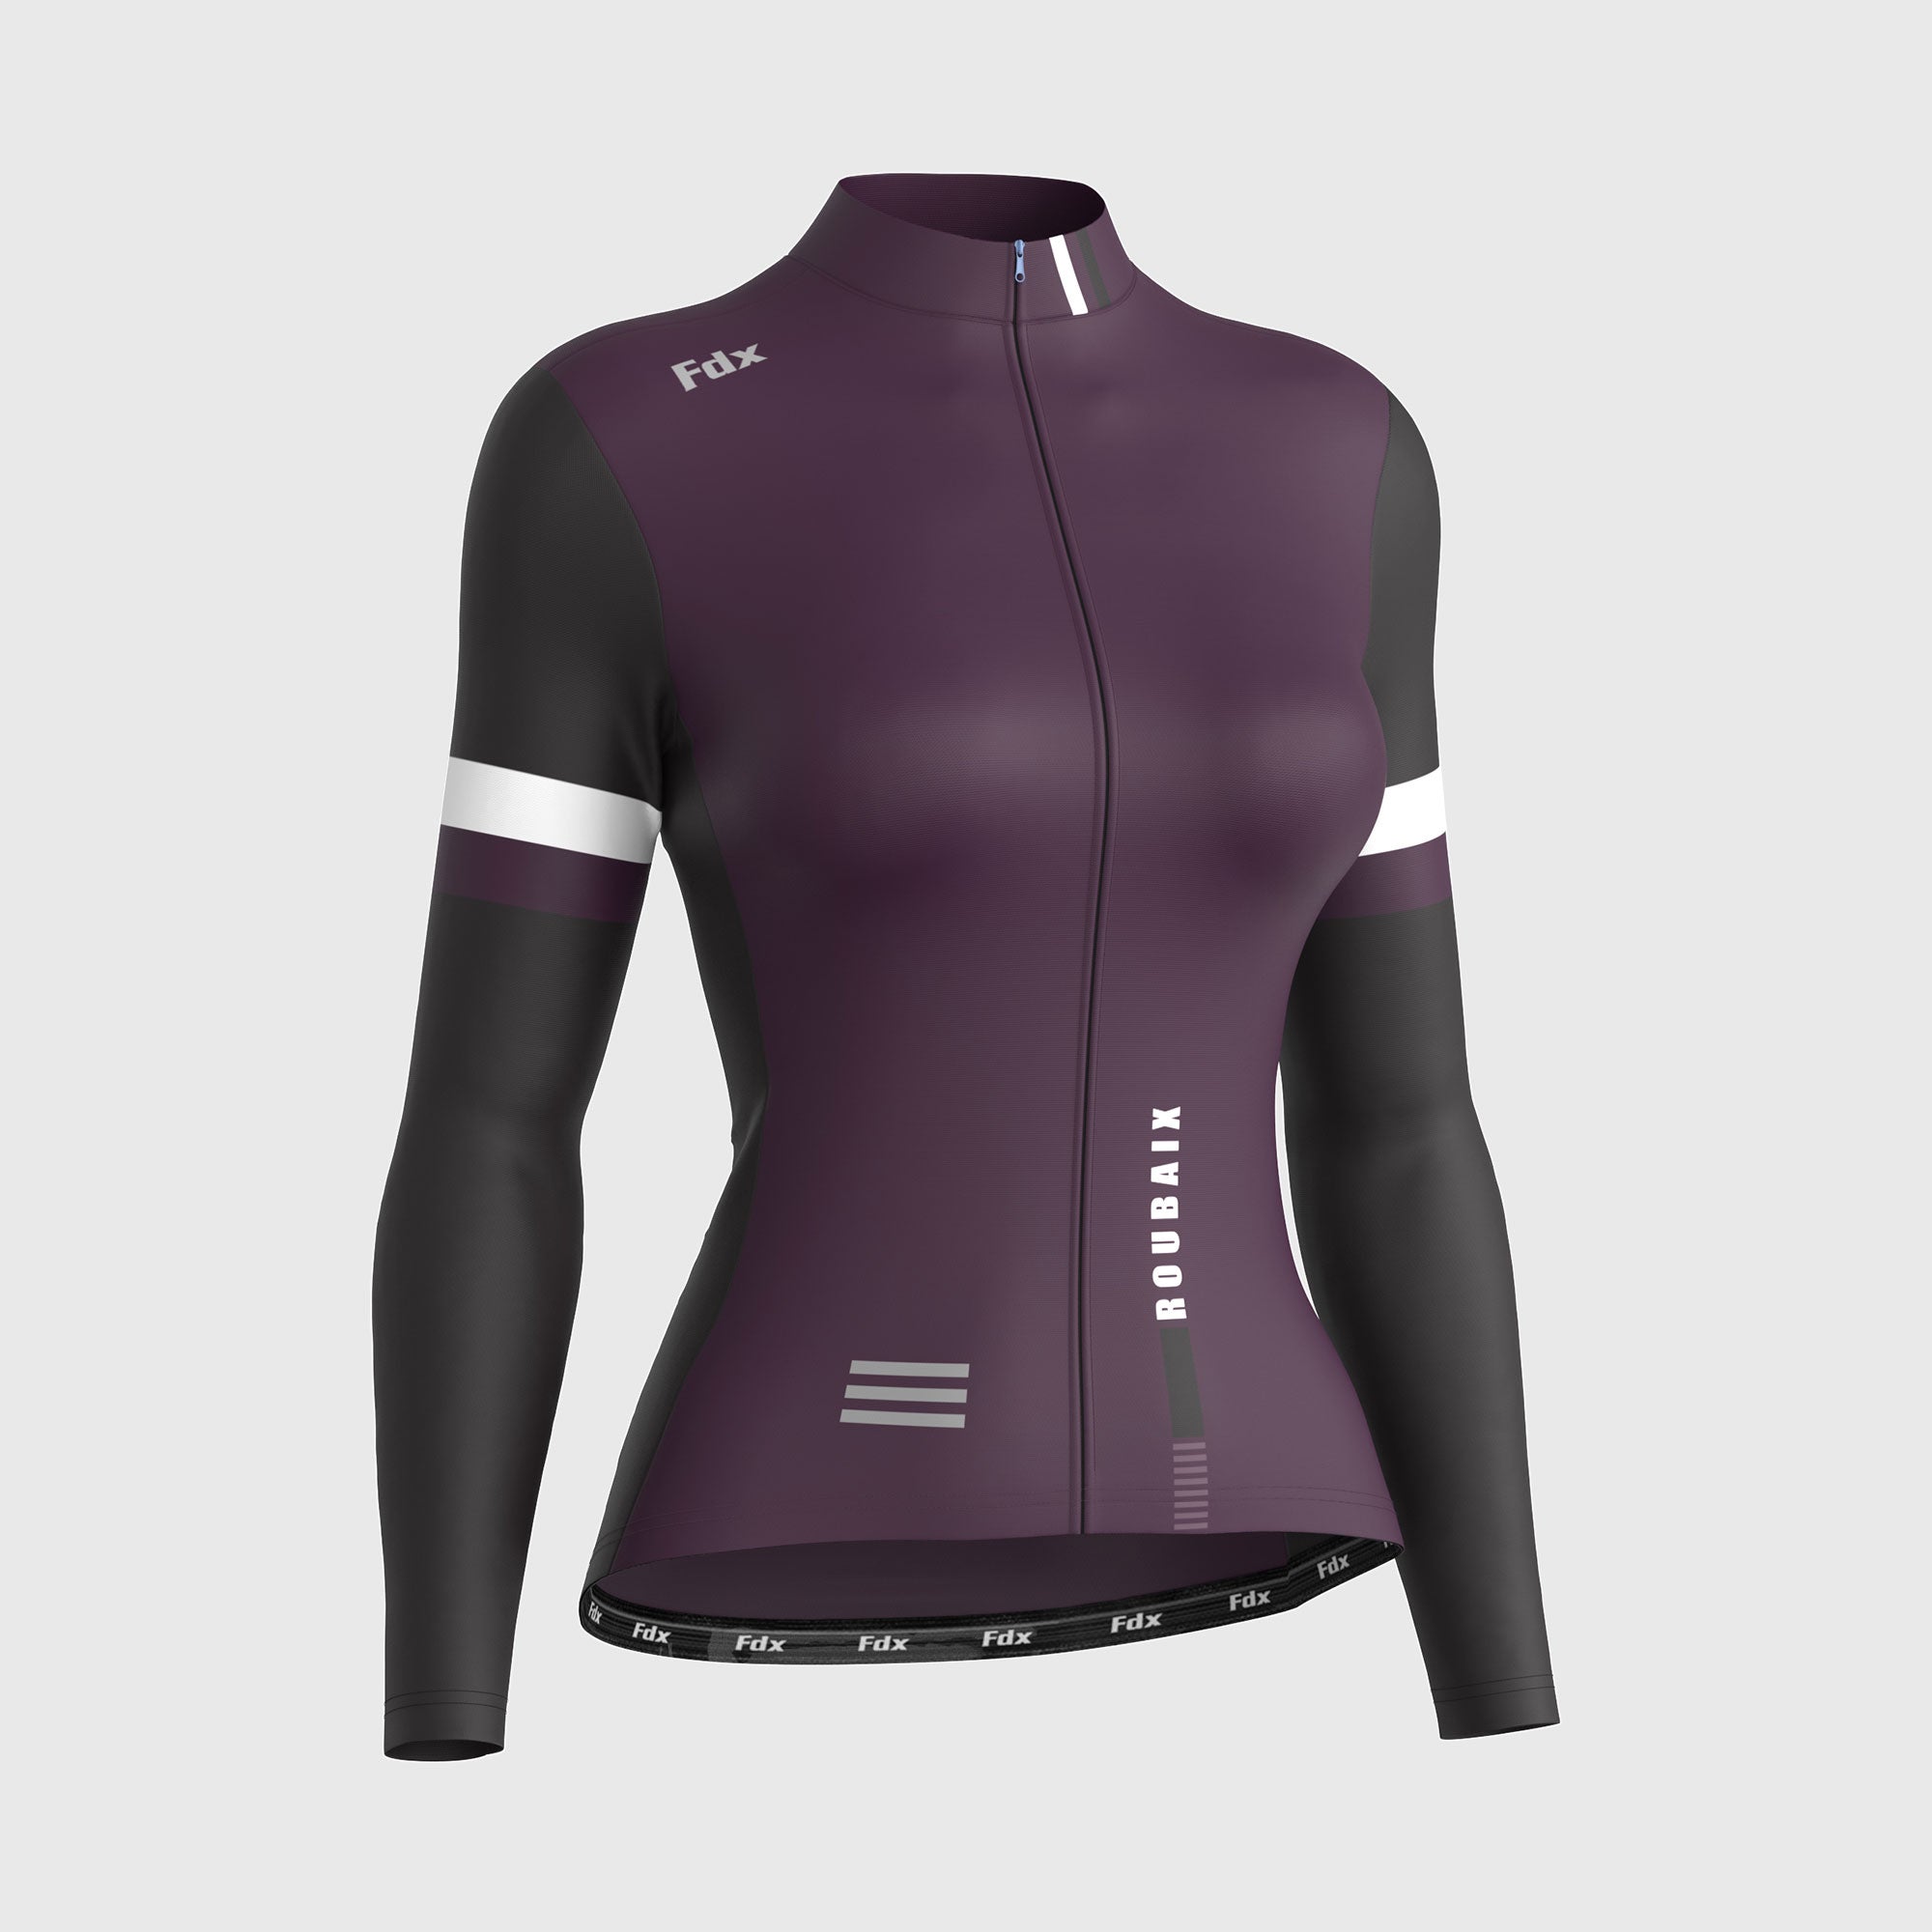 Fdx Best Women's Black & Purple Long Sleeve Cycling Jersey for Winter Roubaix Thermal Fleece Shirt Road Bike Wear Top Full Zipper, Lightweight  Pockets & Hi viz Reflectors - Limited Edition